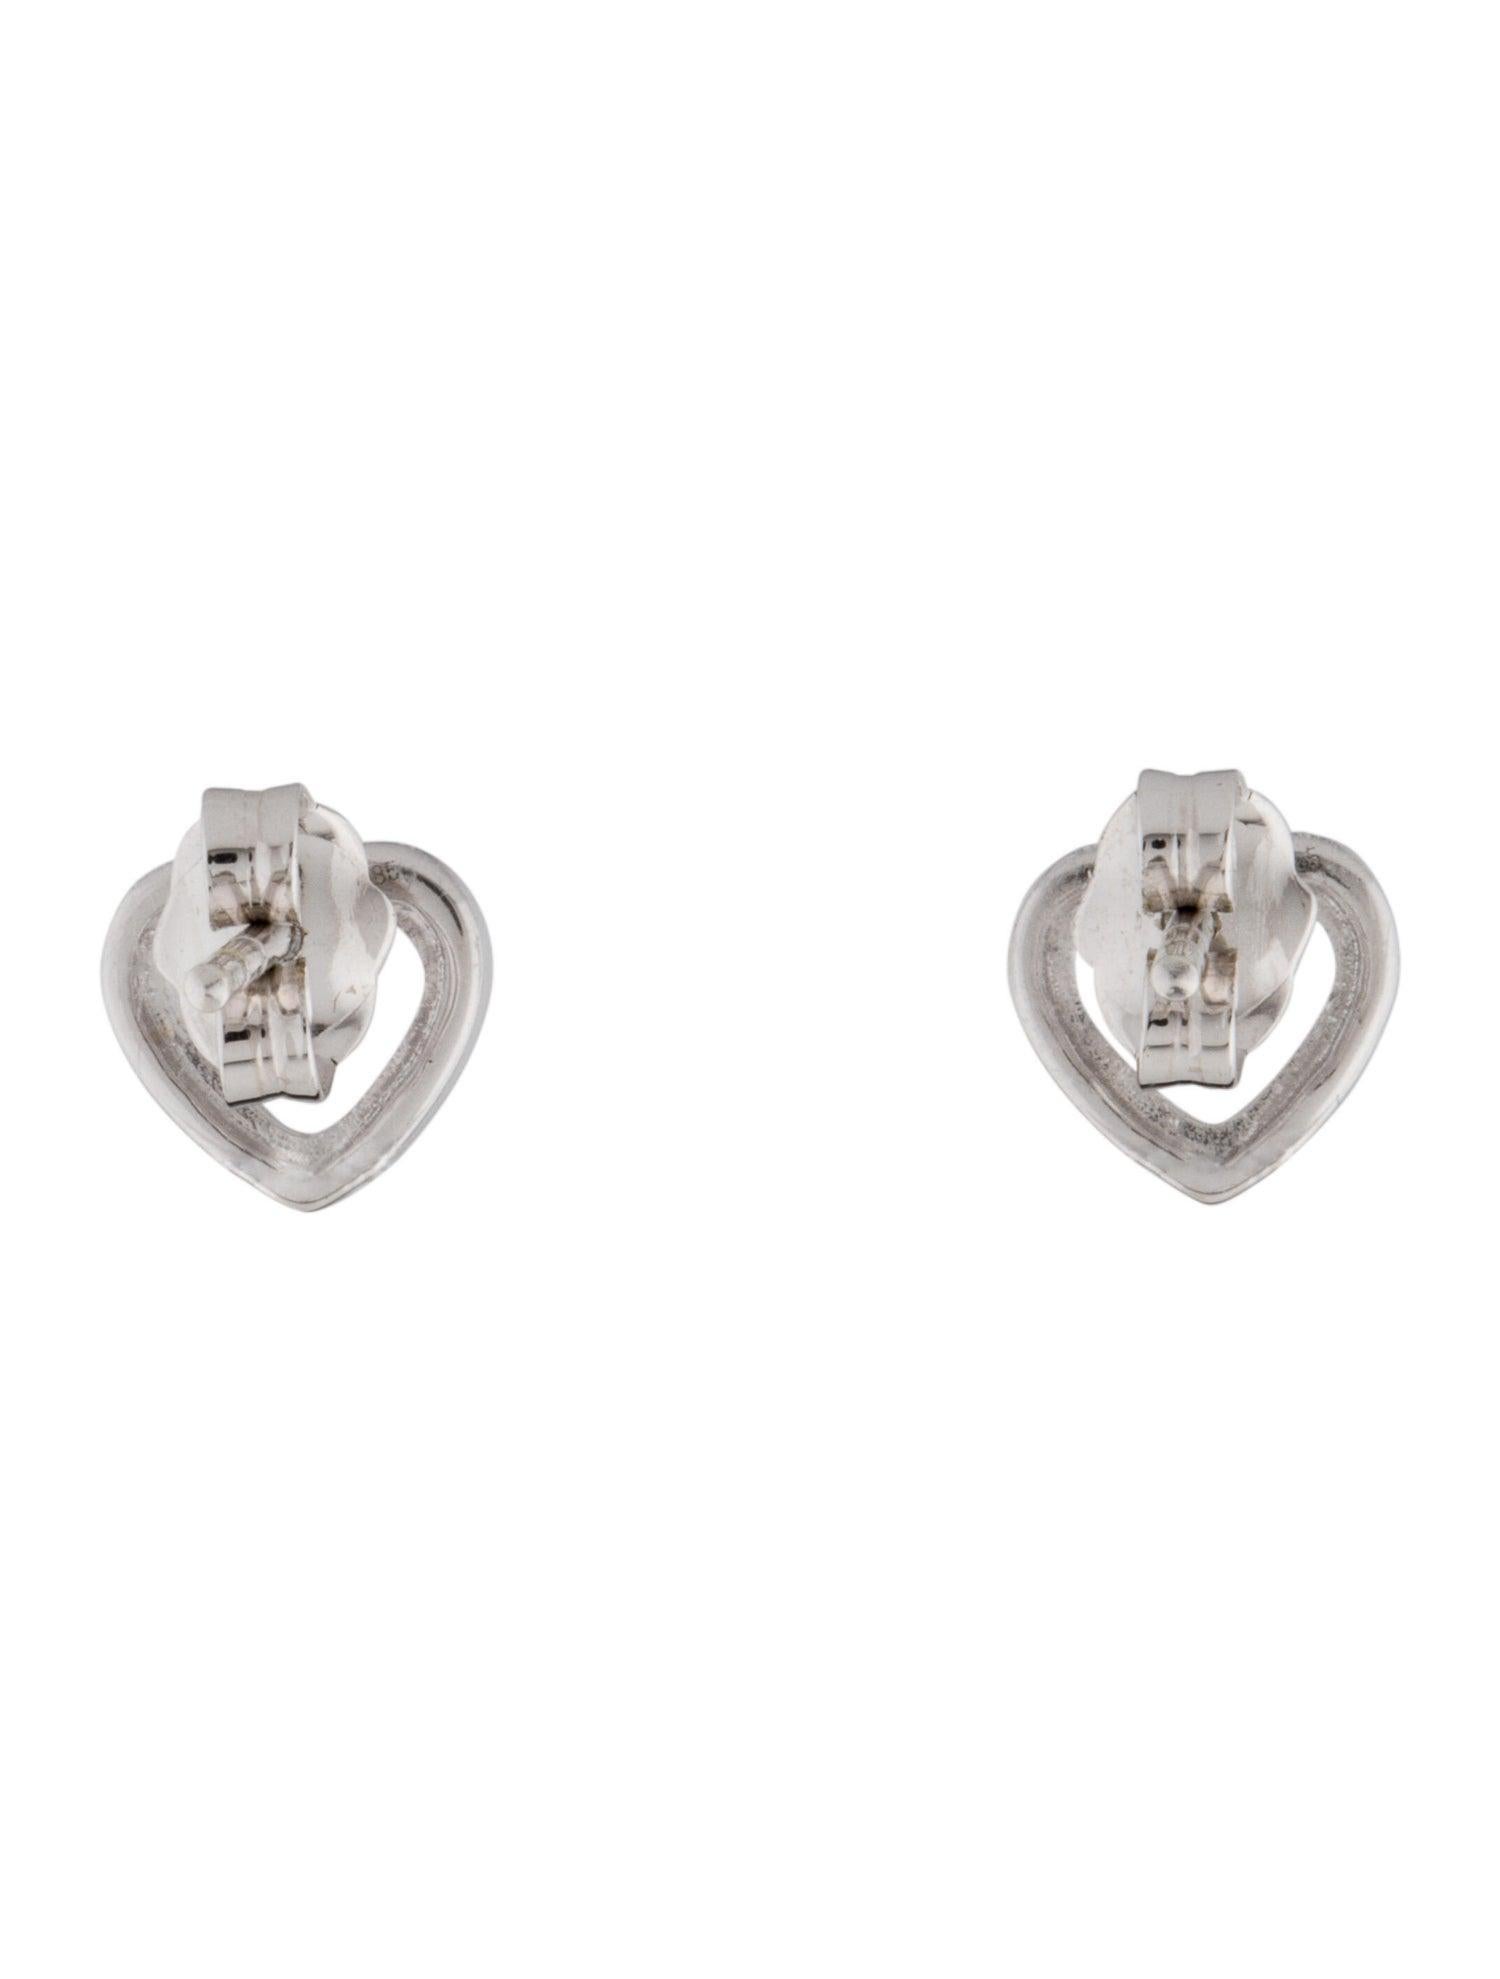 0.10 carat diamond earrings